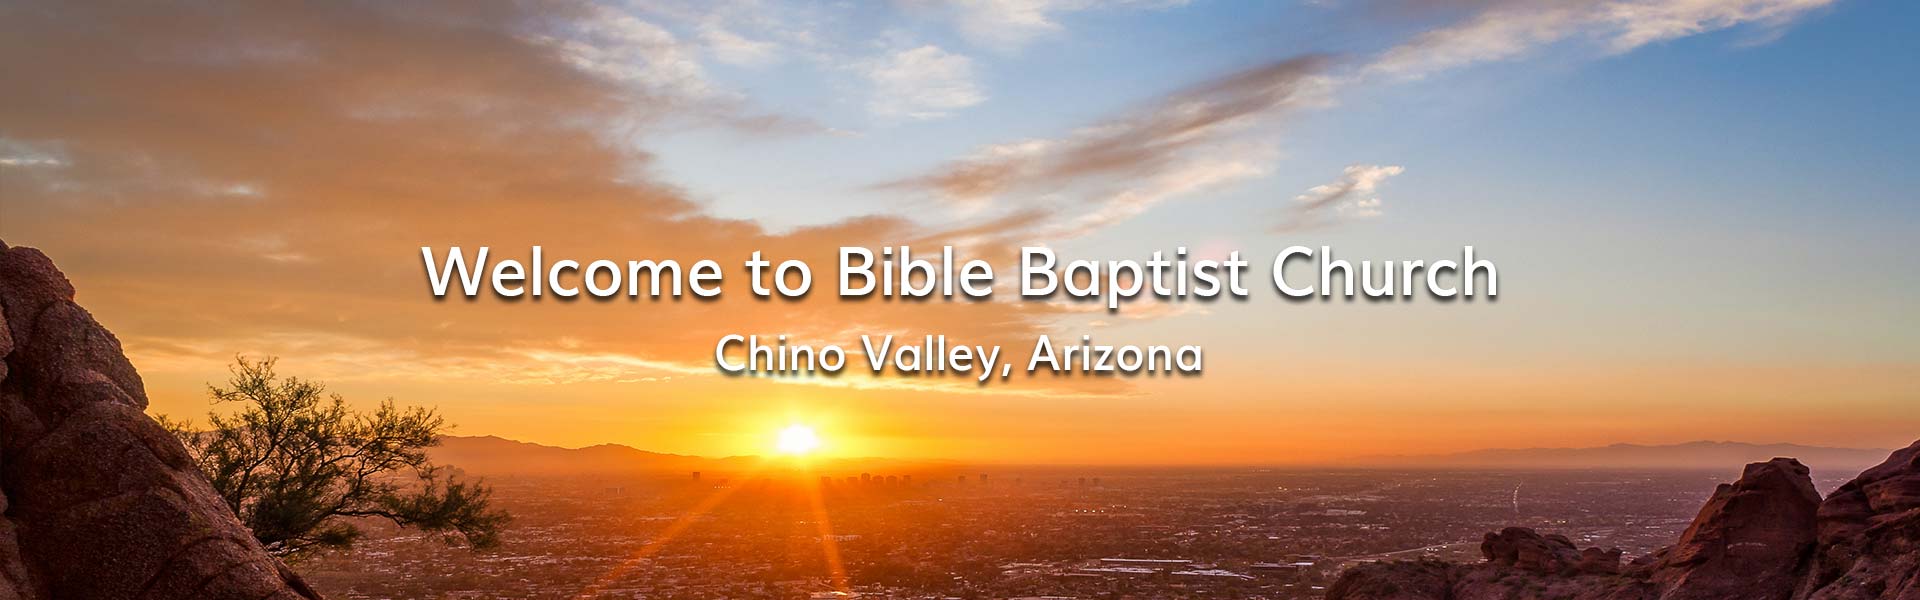 Bible Baptist Church Chino Valley Arizona Prescott Prescott Valley